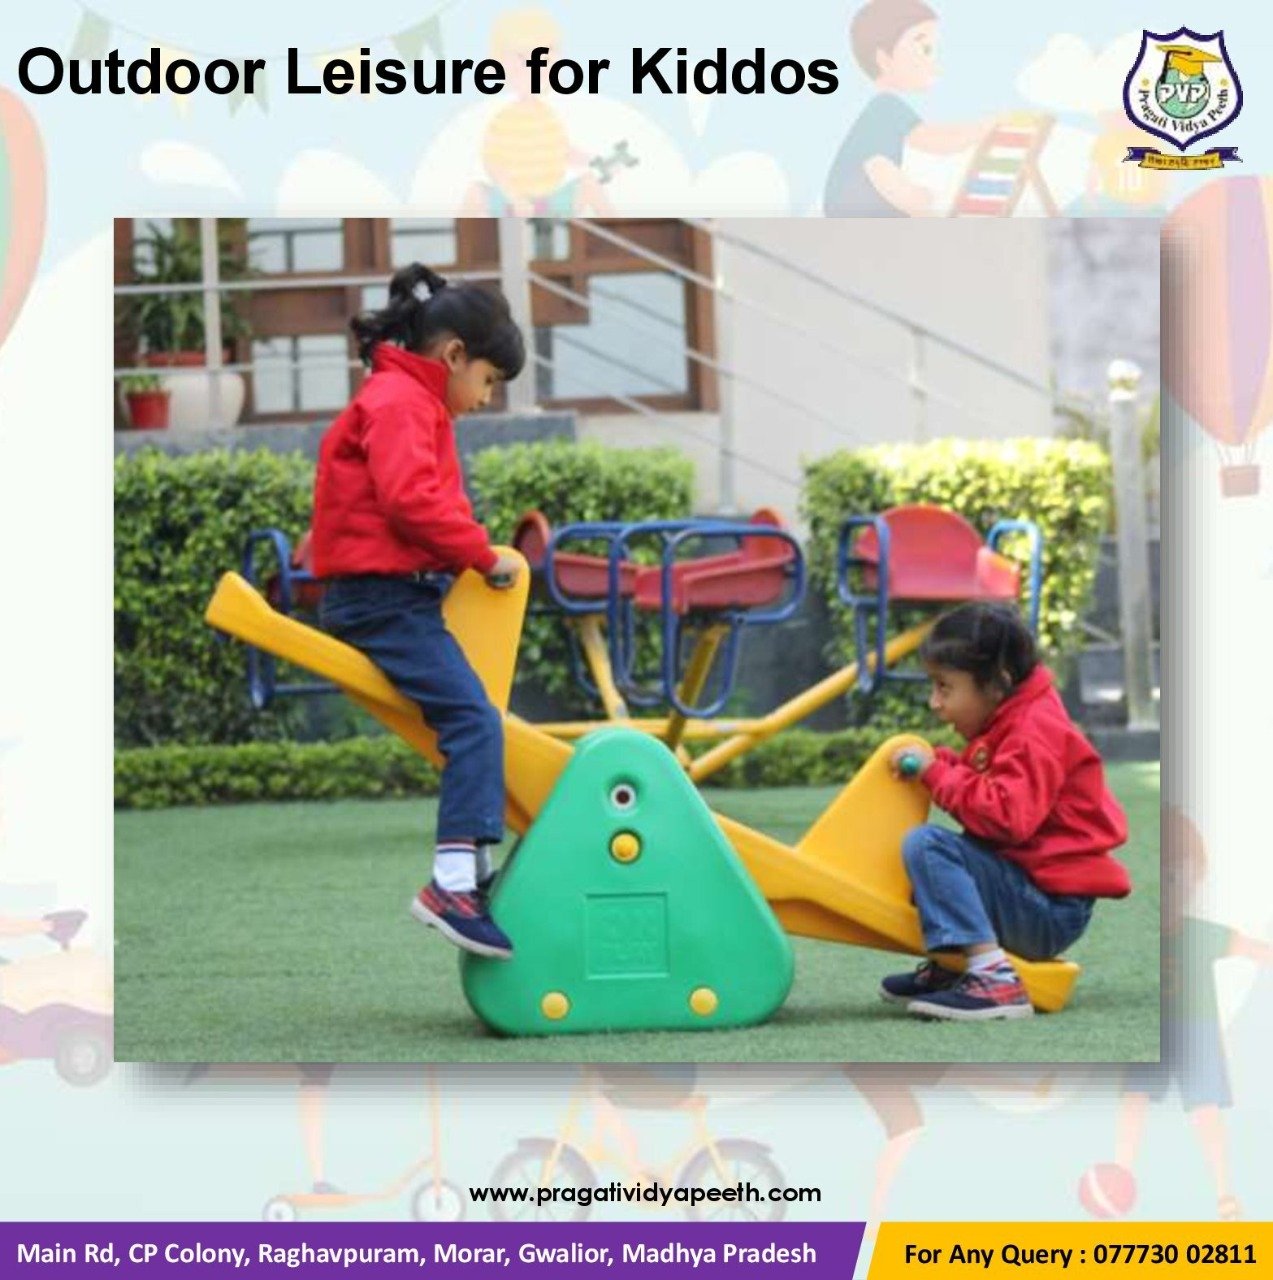 Outdoor Leisure for Kiddos